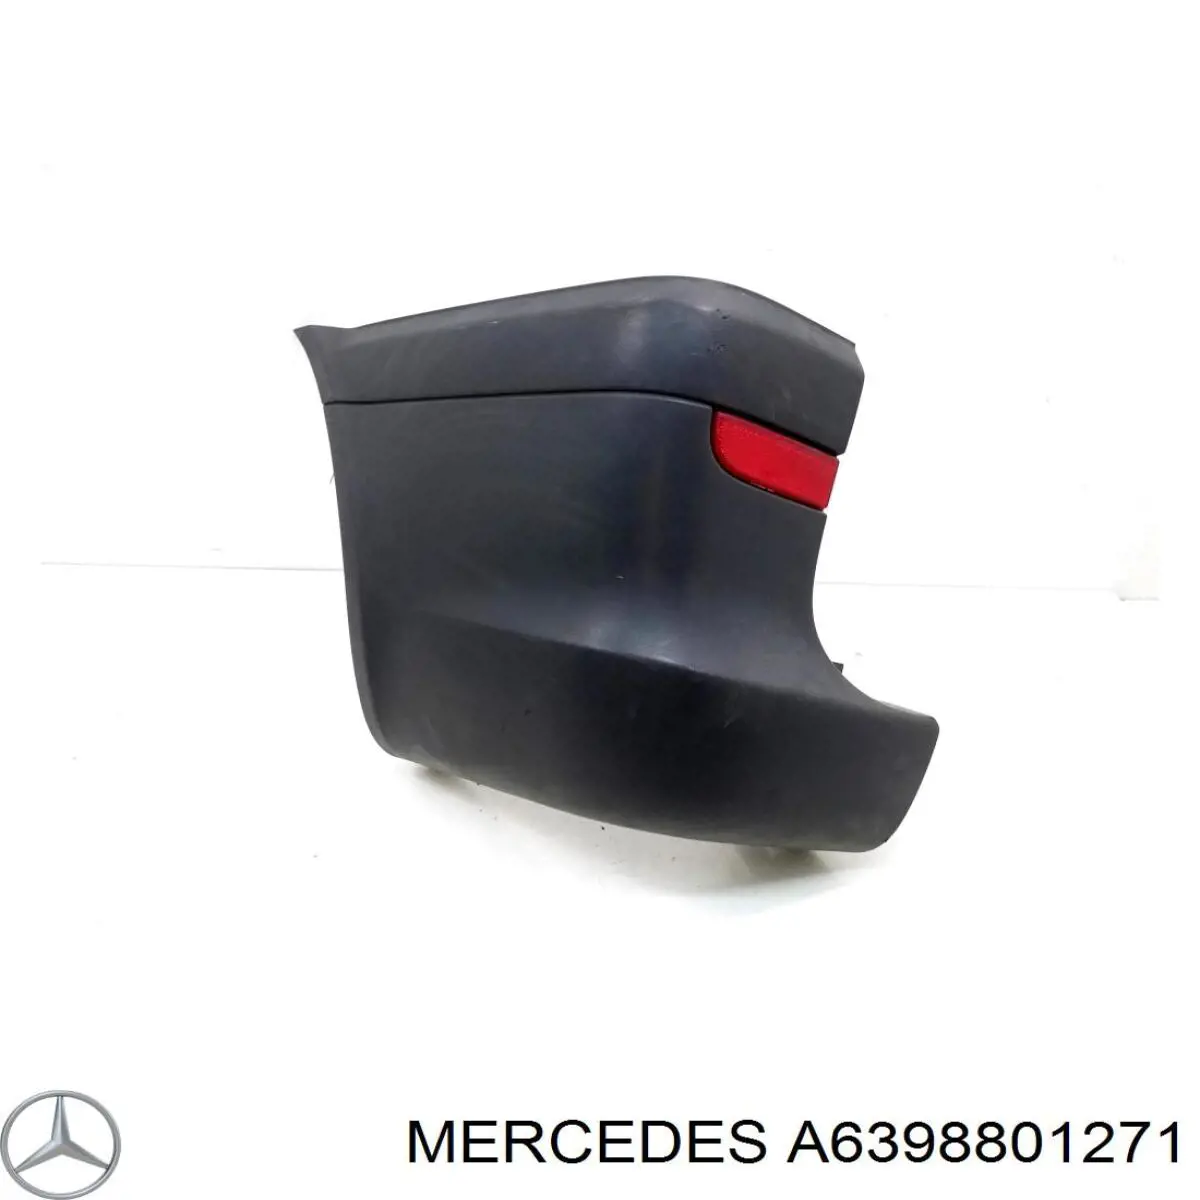 6398801271 Mercedes бампер задний, левая часть